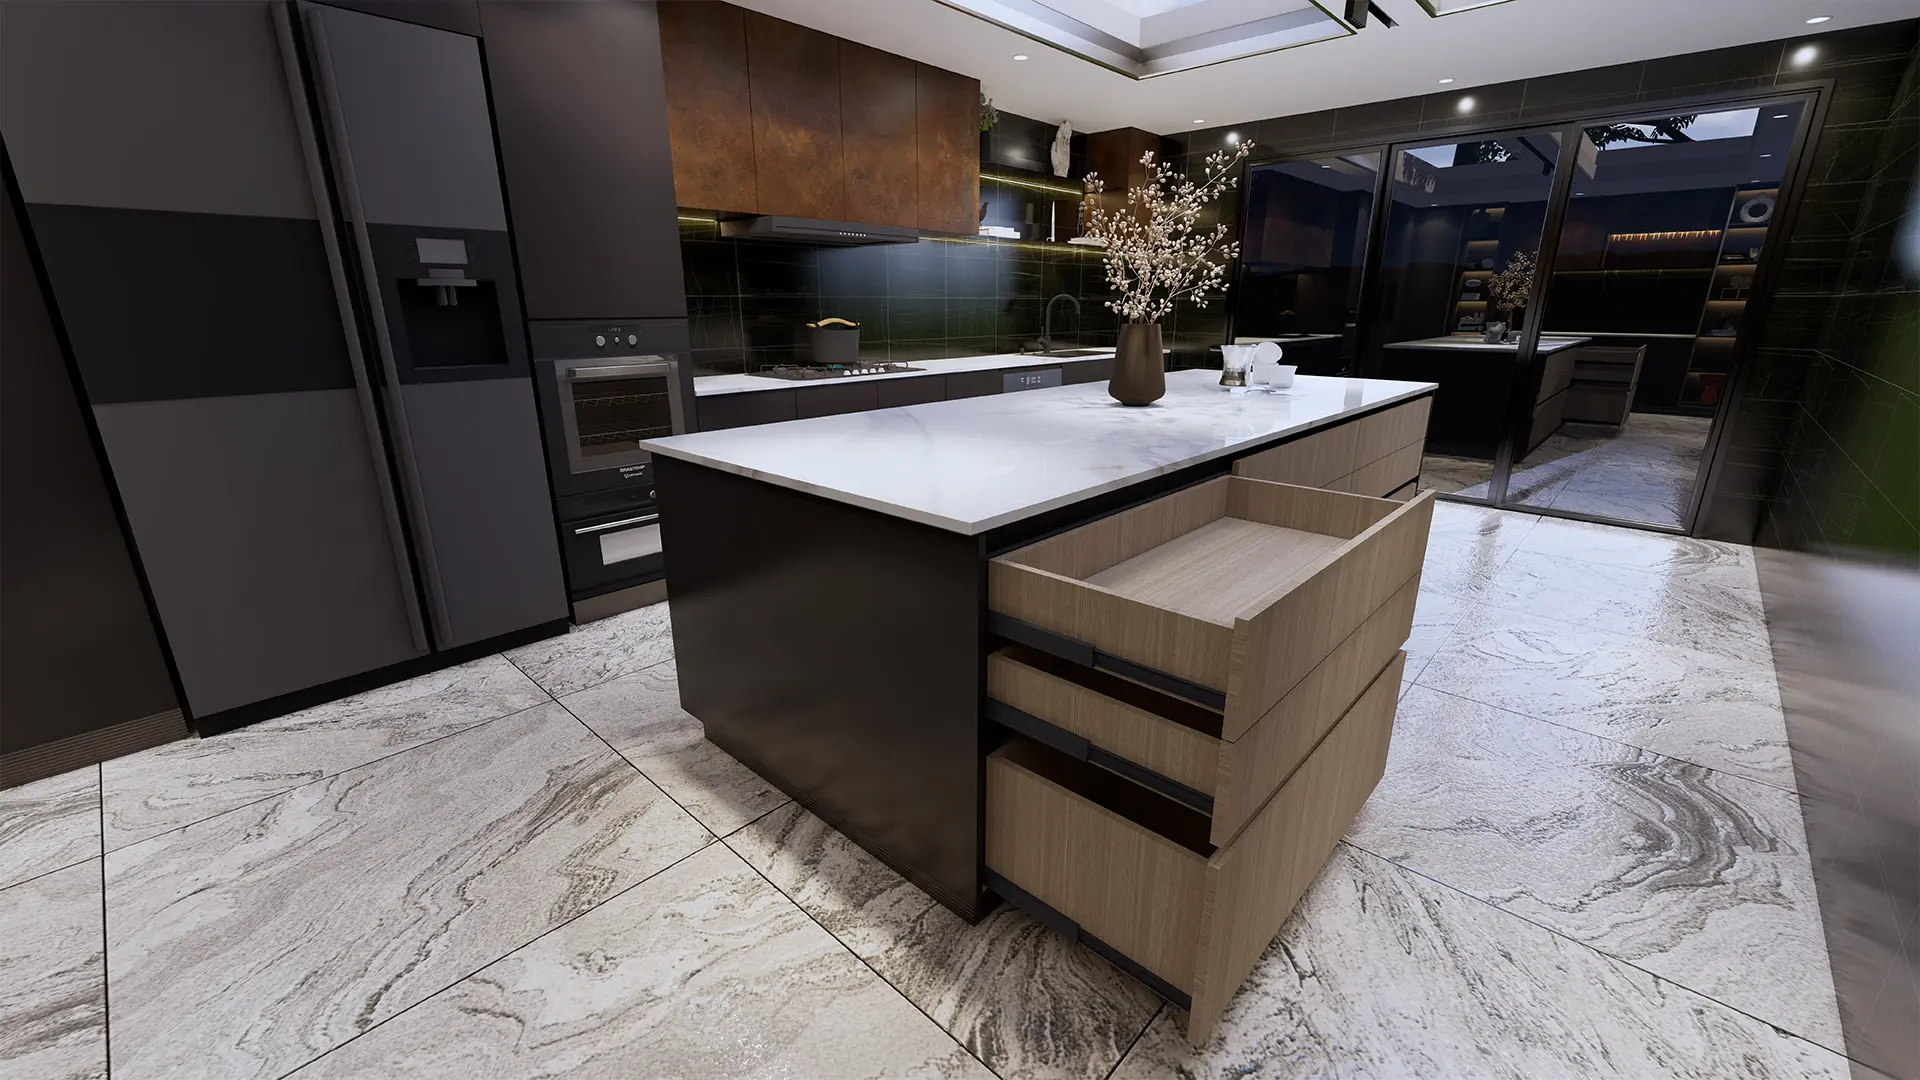 Linea modern wooden ceramic kitchen cabinet for home bk ciandre 3